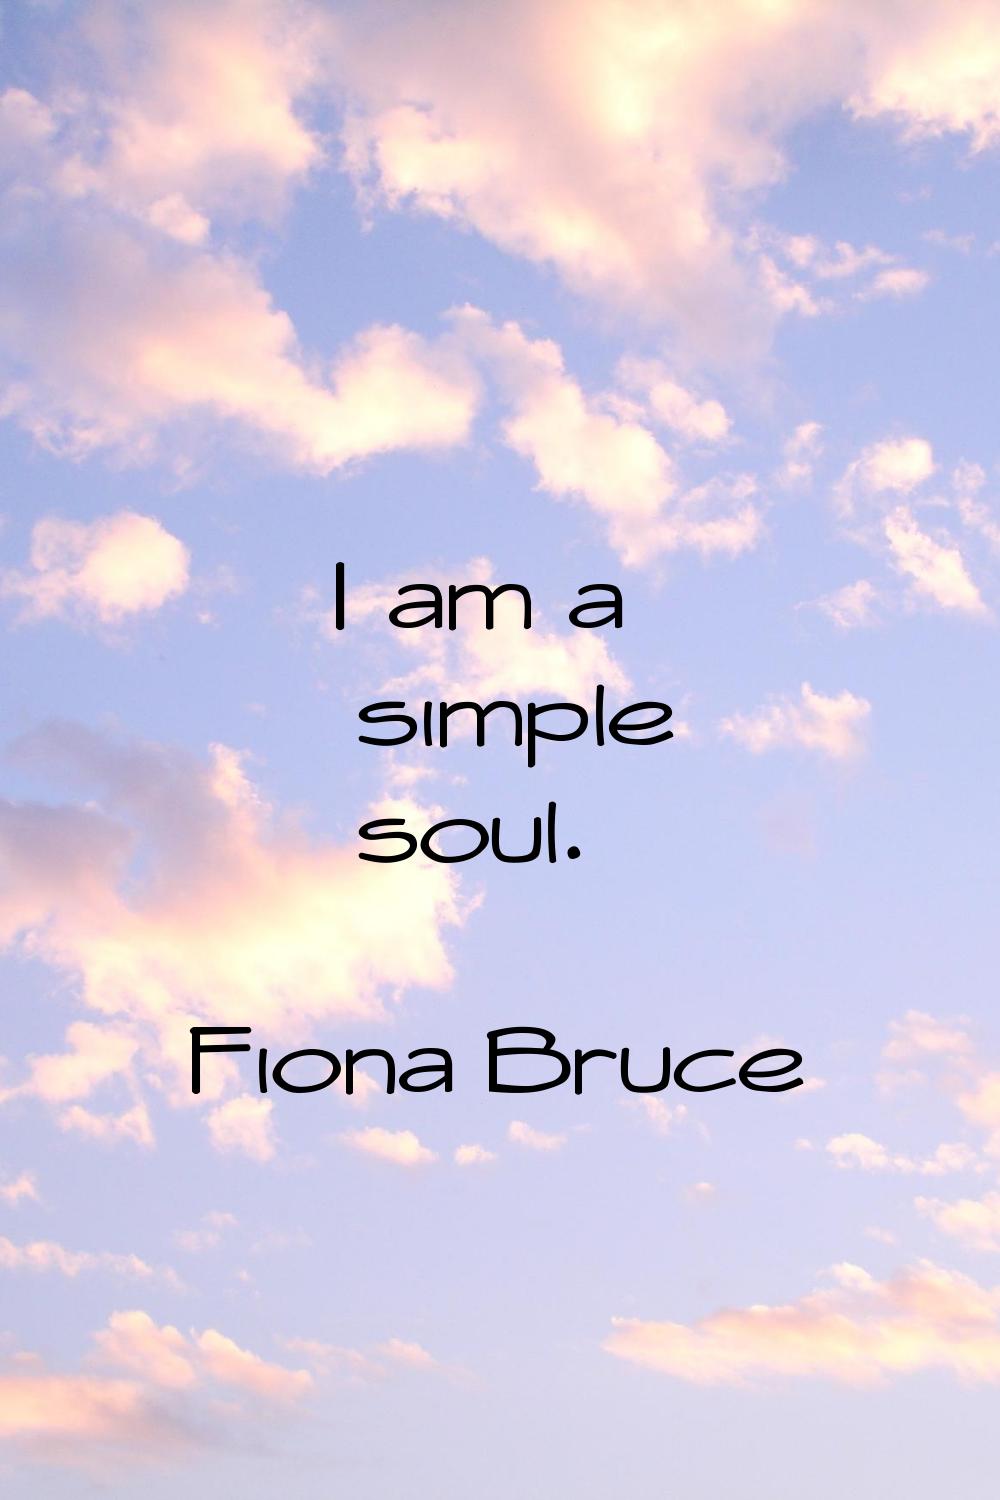 I am a simple soul.